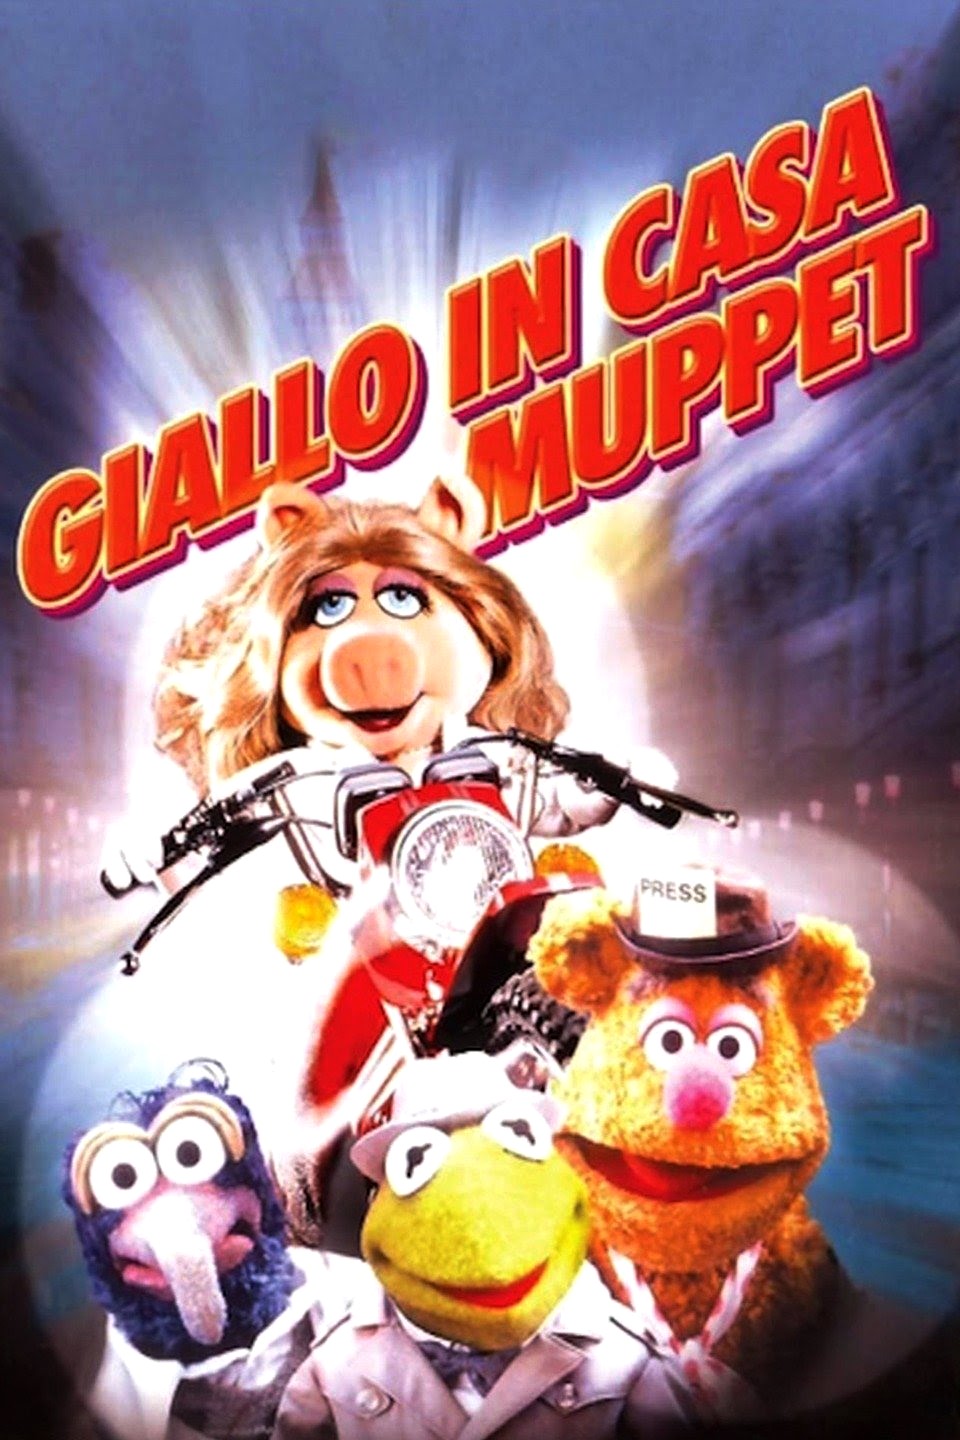 Giallo in casa Muppet (1981)